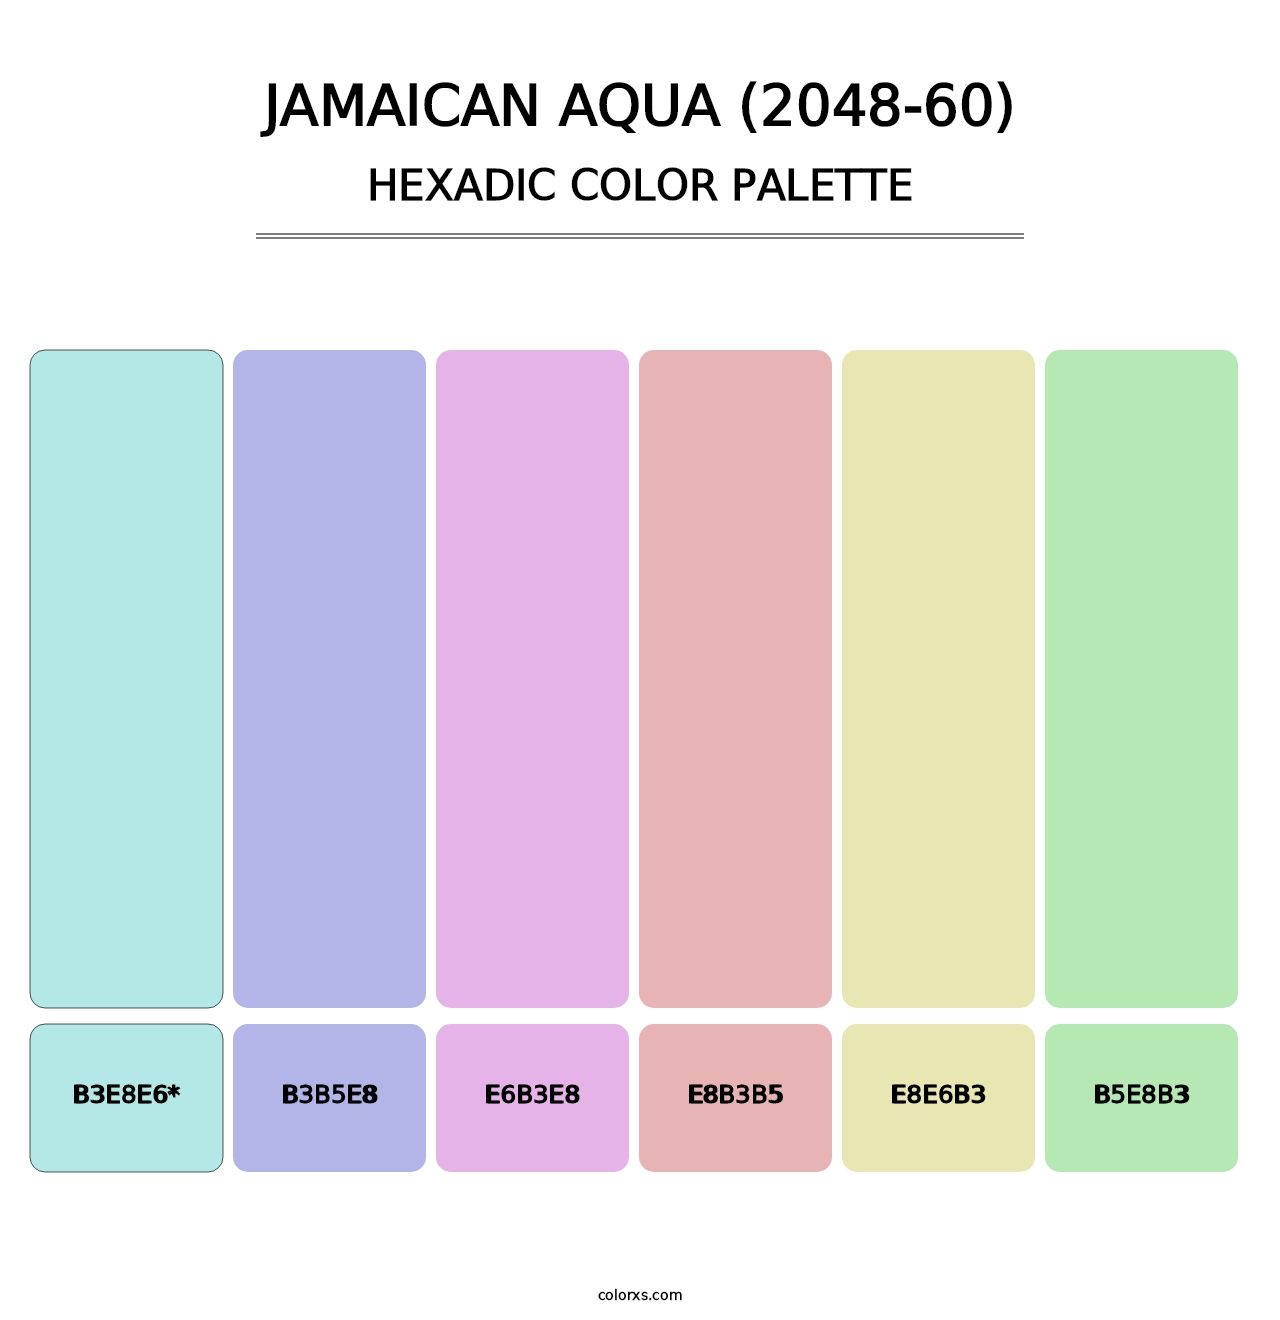 Jamaican Aqua (2048-60) - Hexadic Color Palette